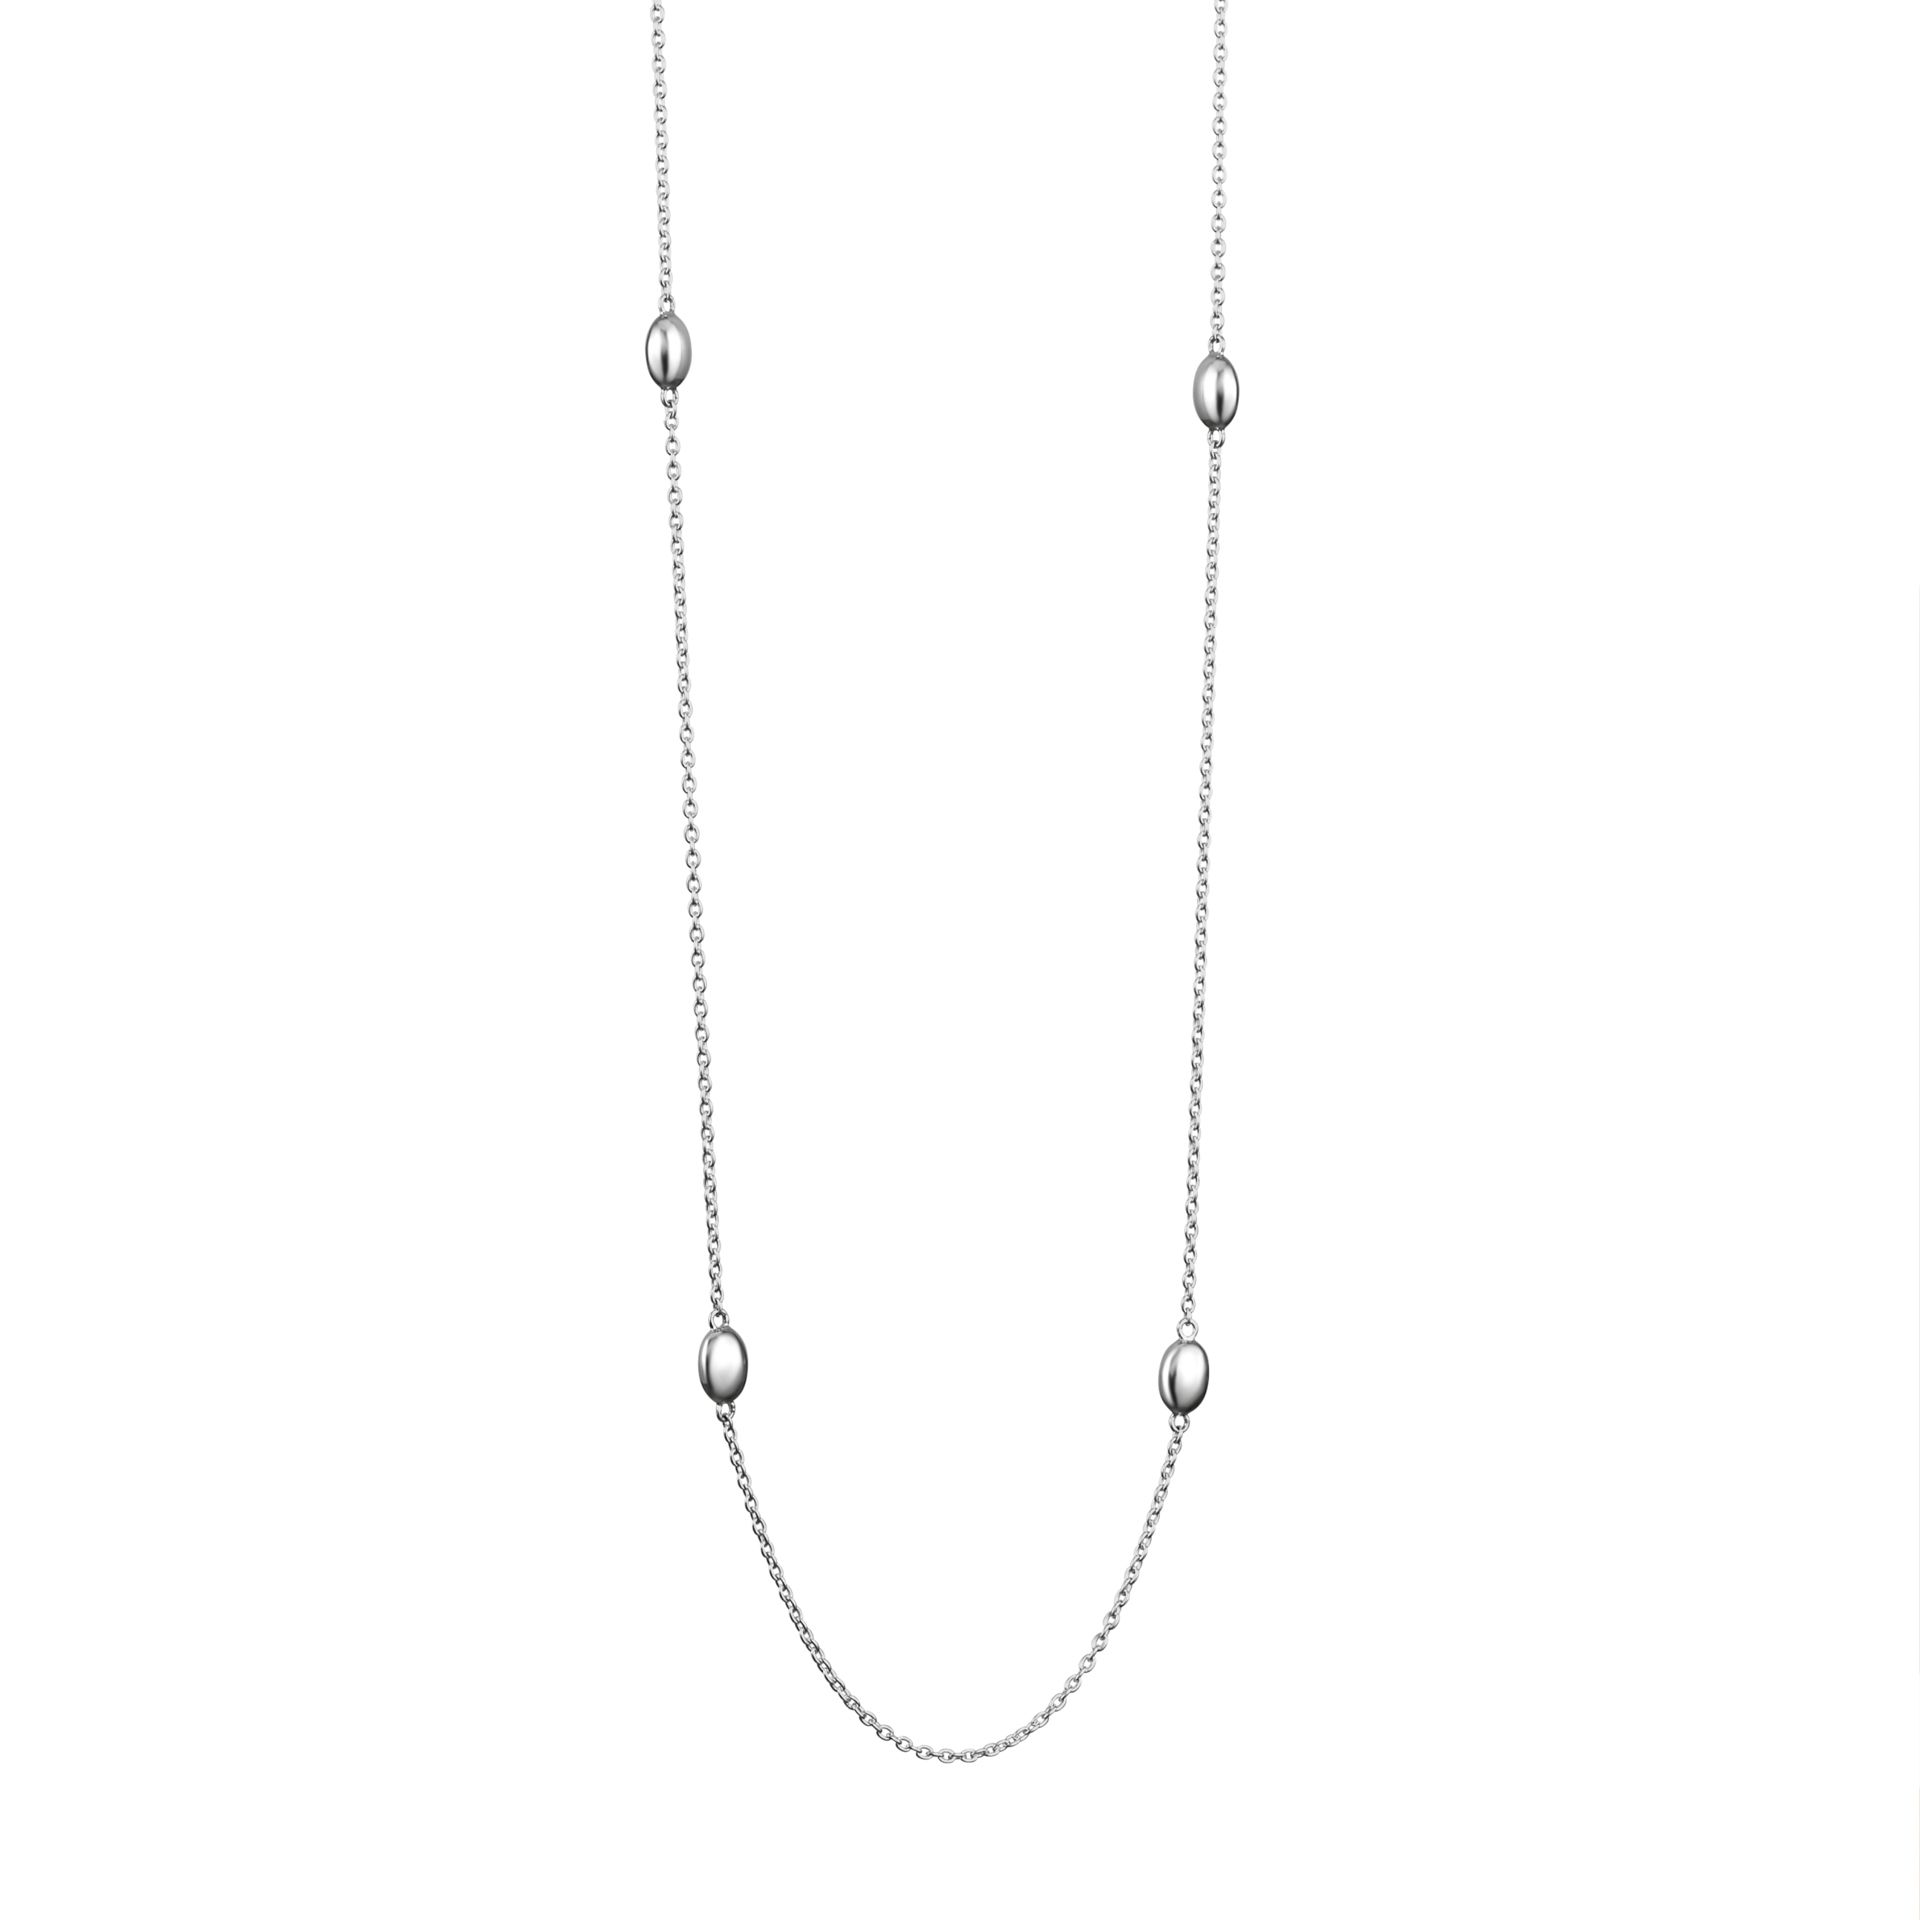 Efva Attling Love Bead Long Necklace - Silver 85 CM - SILVER